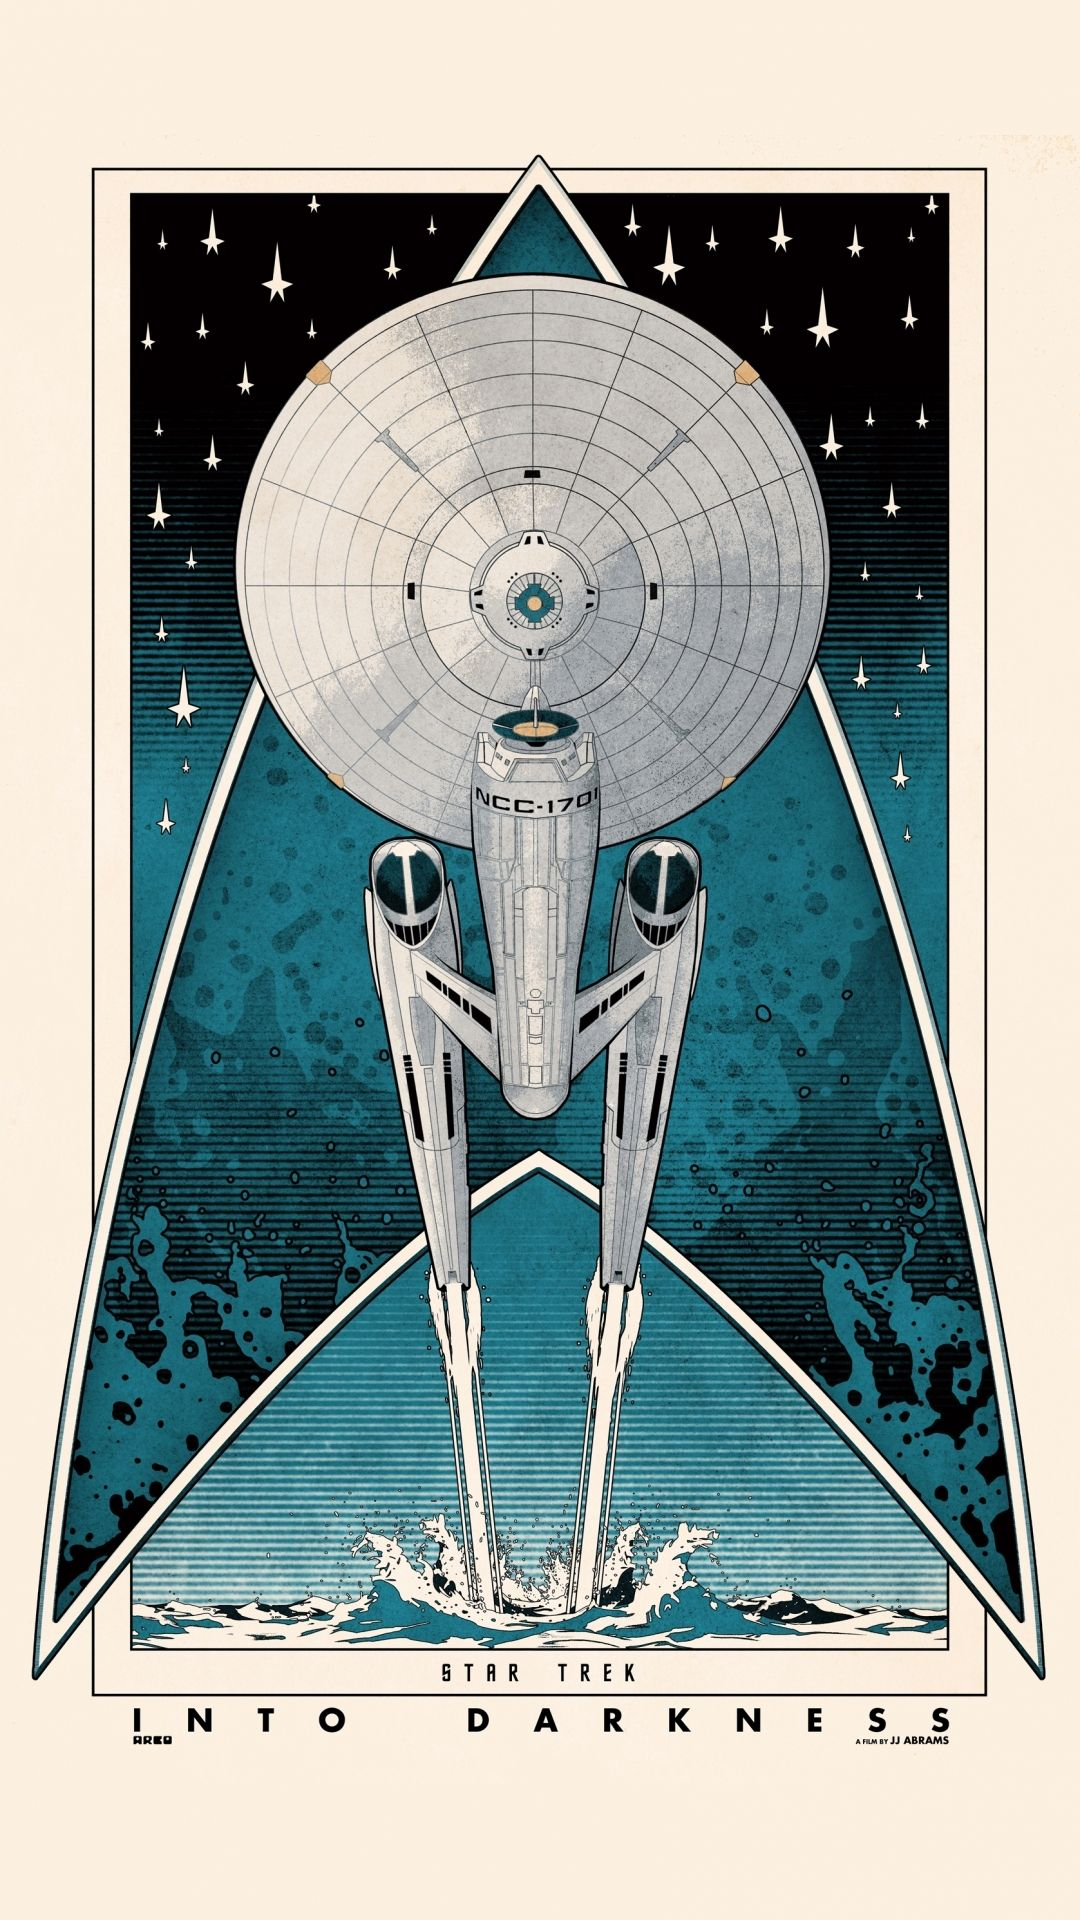 1080x1920 iPhone 6 Movie/Star Trek Into Darkness Wallpaper ID: 586755 | Star trek posters, Star trek poster, Star trek wallpaper